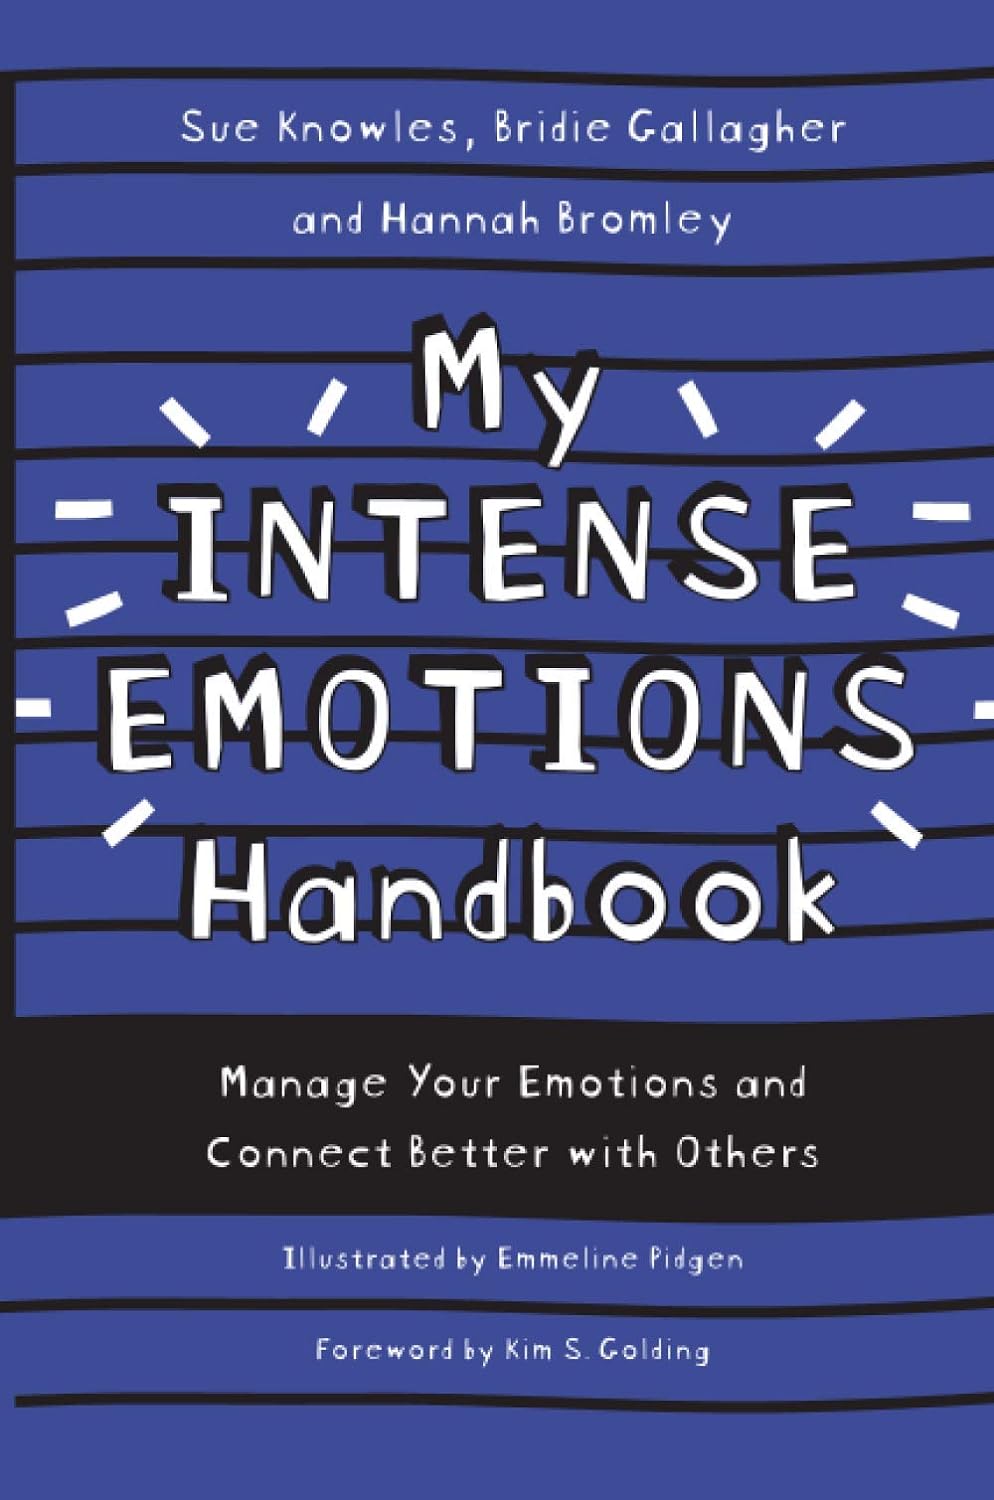 My intense emotions handbook by Susan Knowles et al.